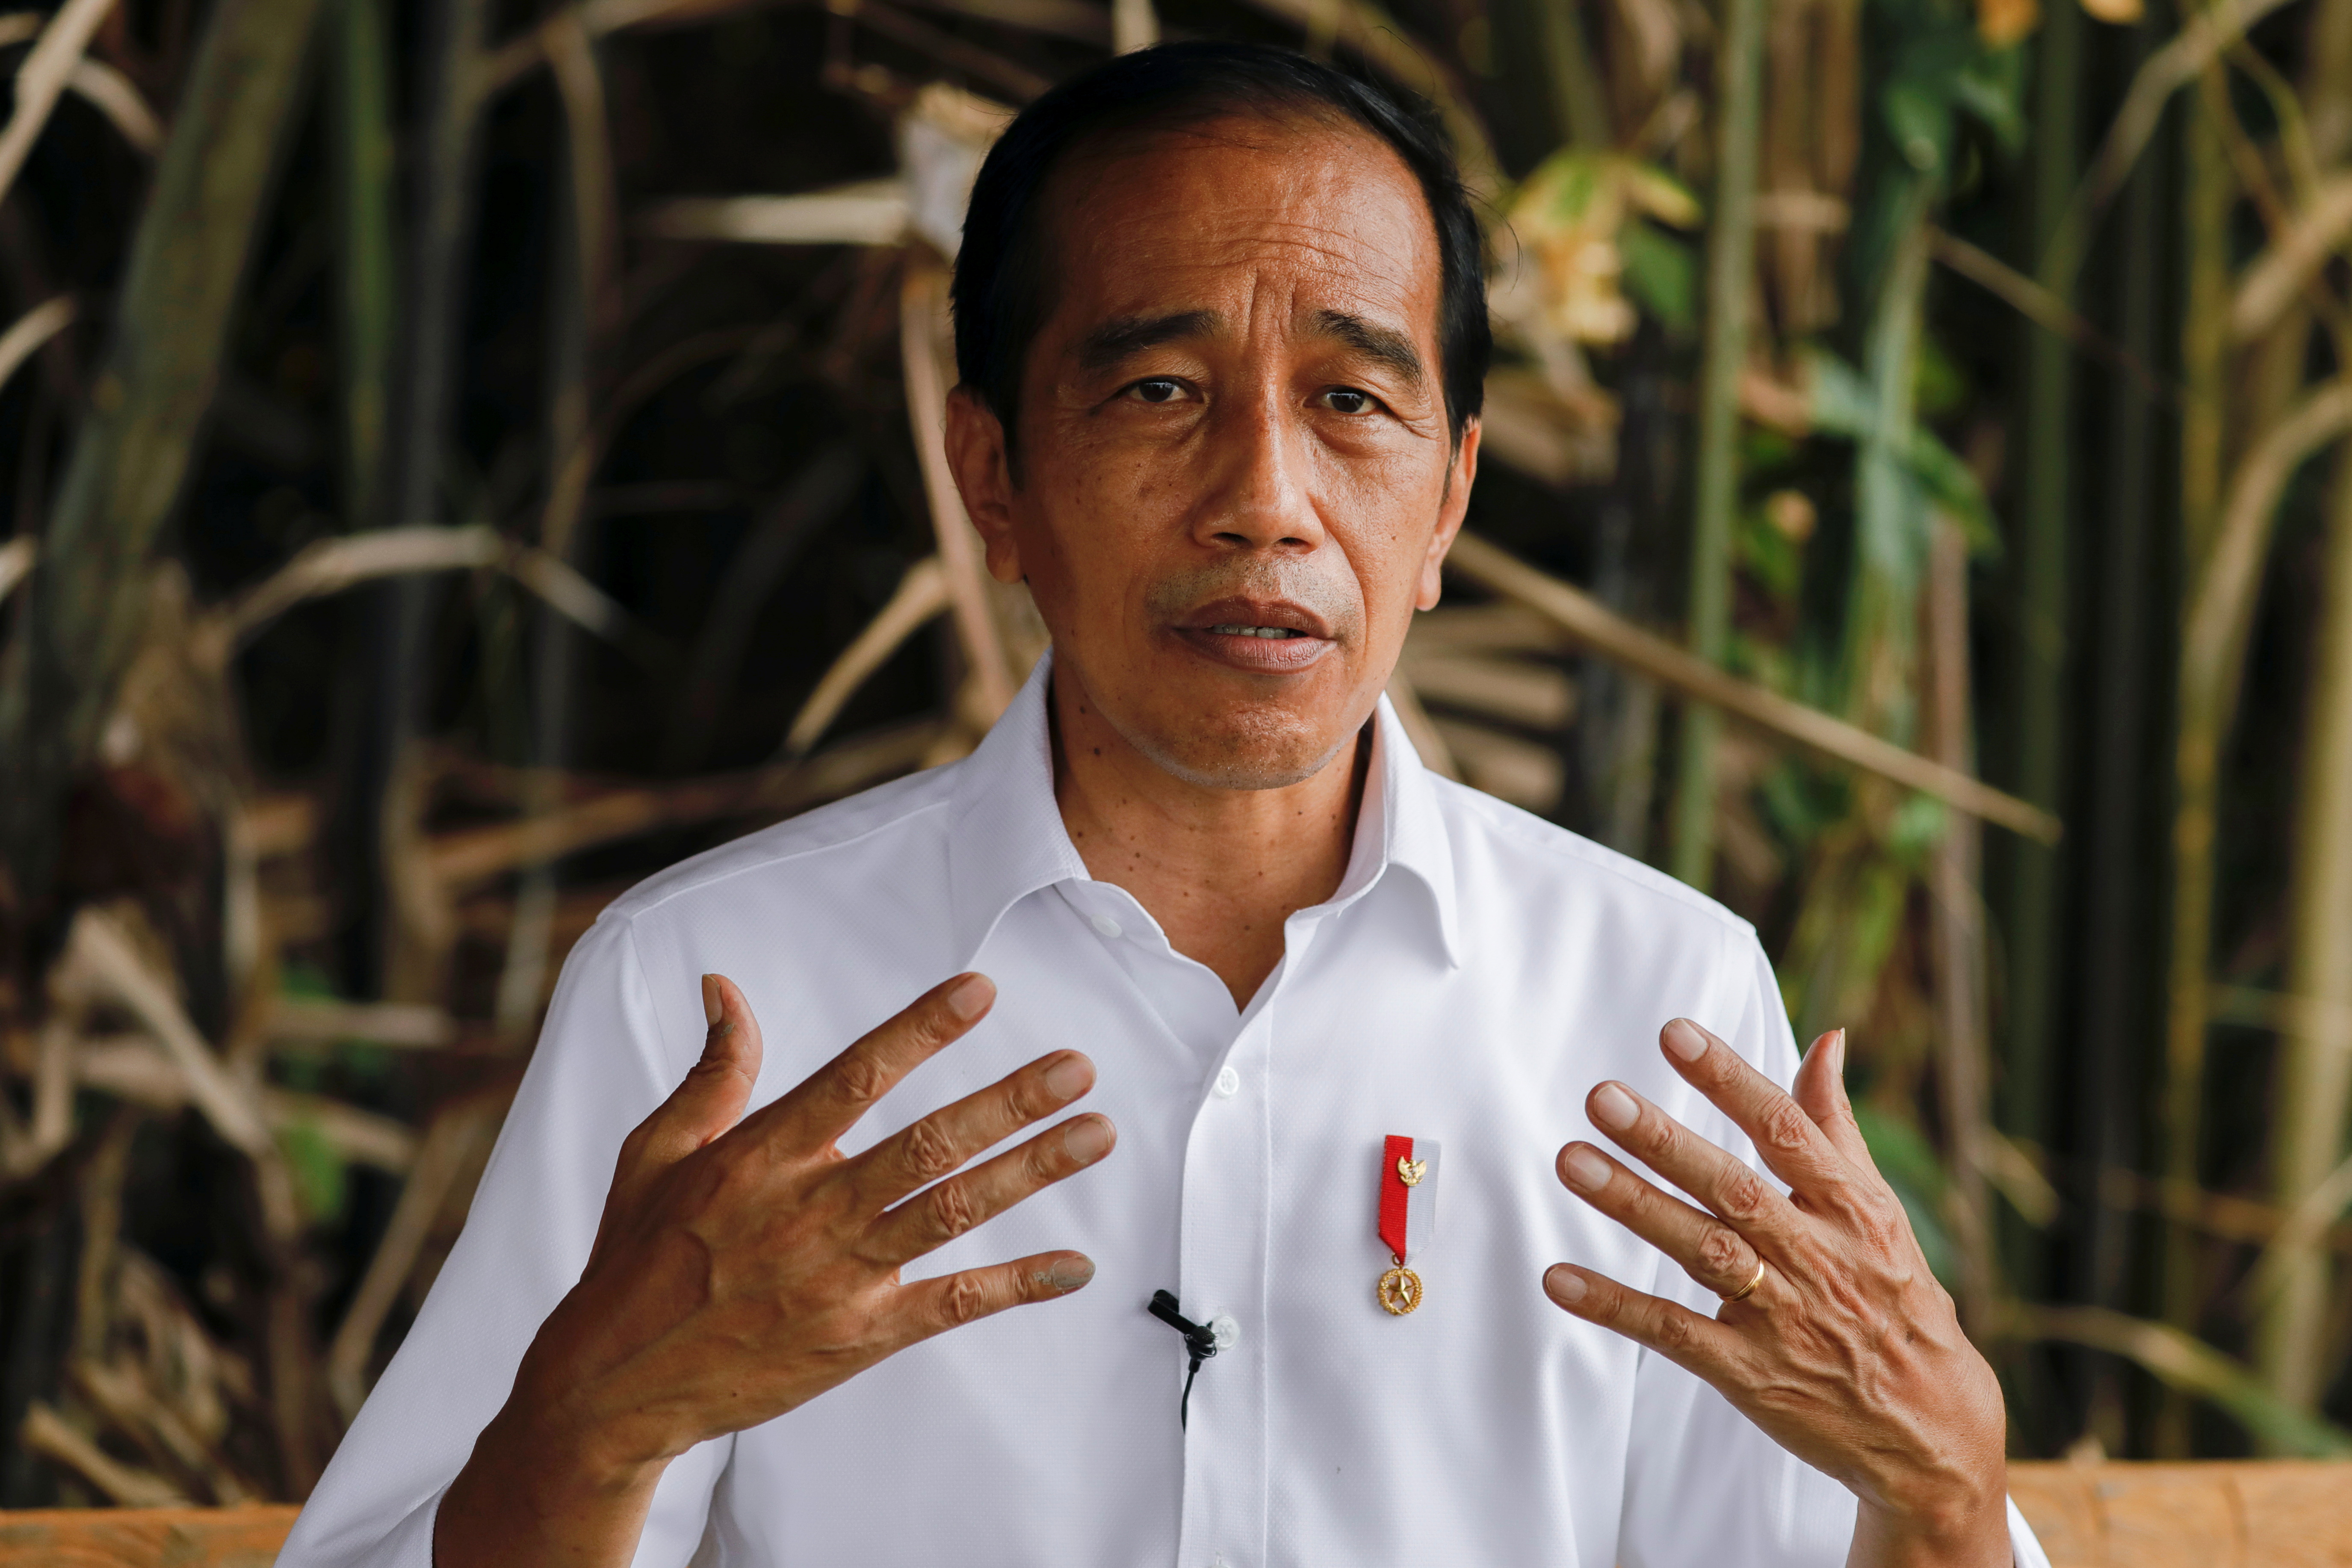 Indonesian President Joko Widodo gestures during an interview in Bebatu, near Tarakan